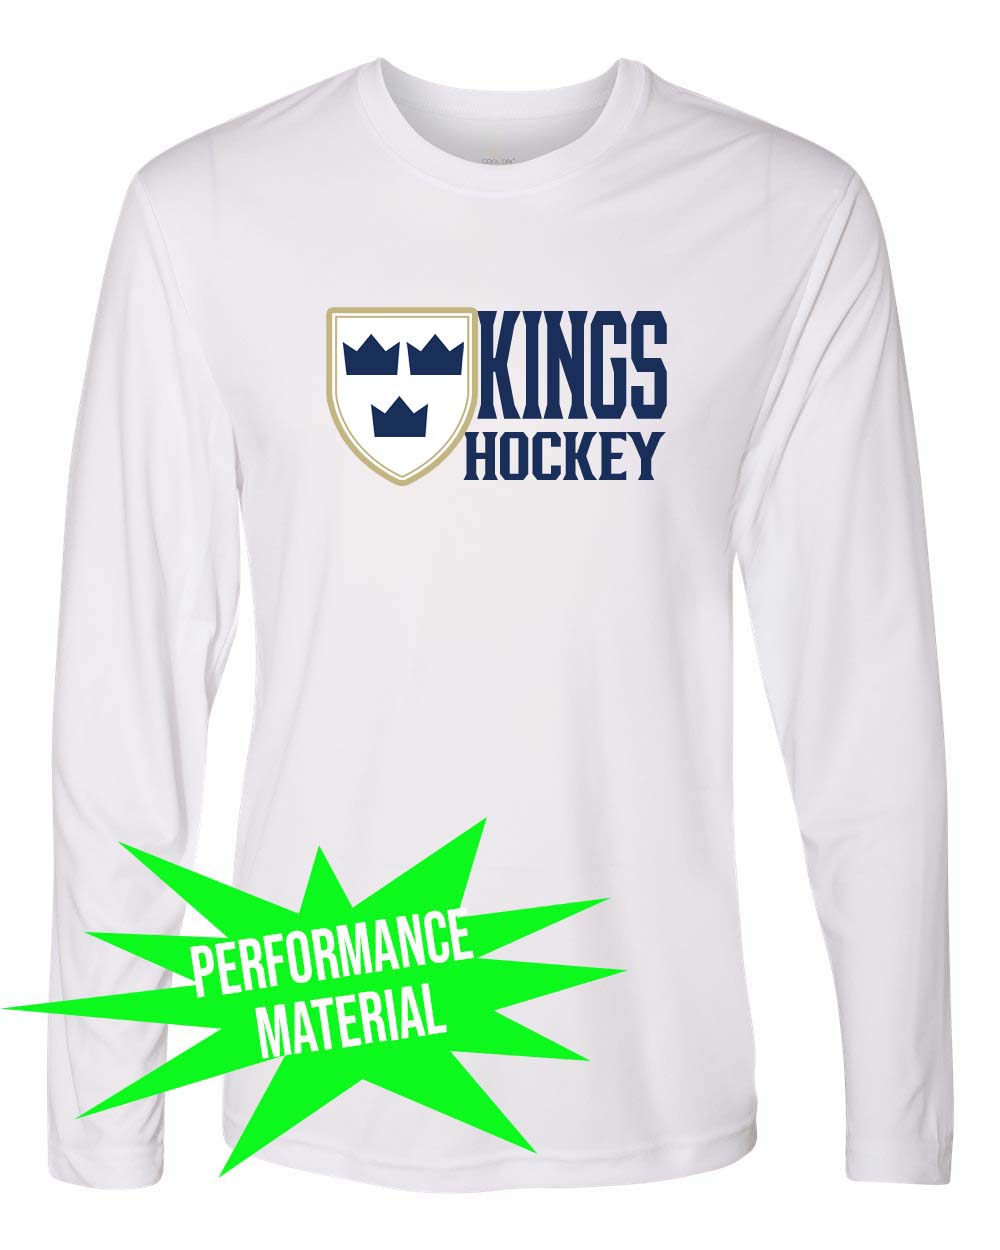 Kings Hockey Performance Material Design 4 Long Sleeve Shirt